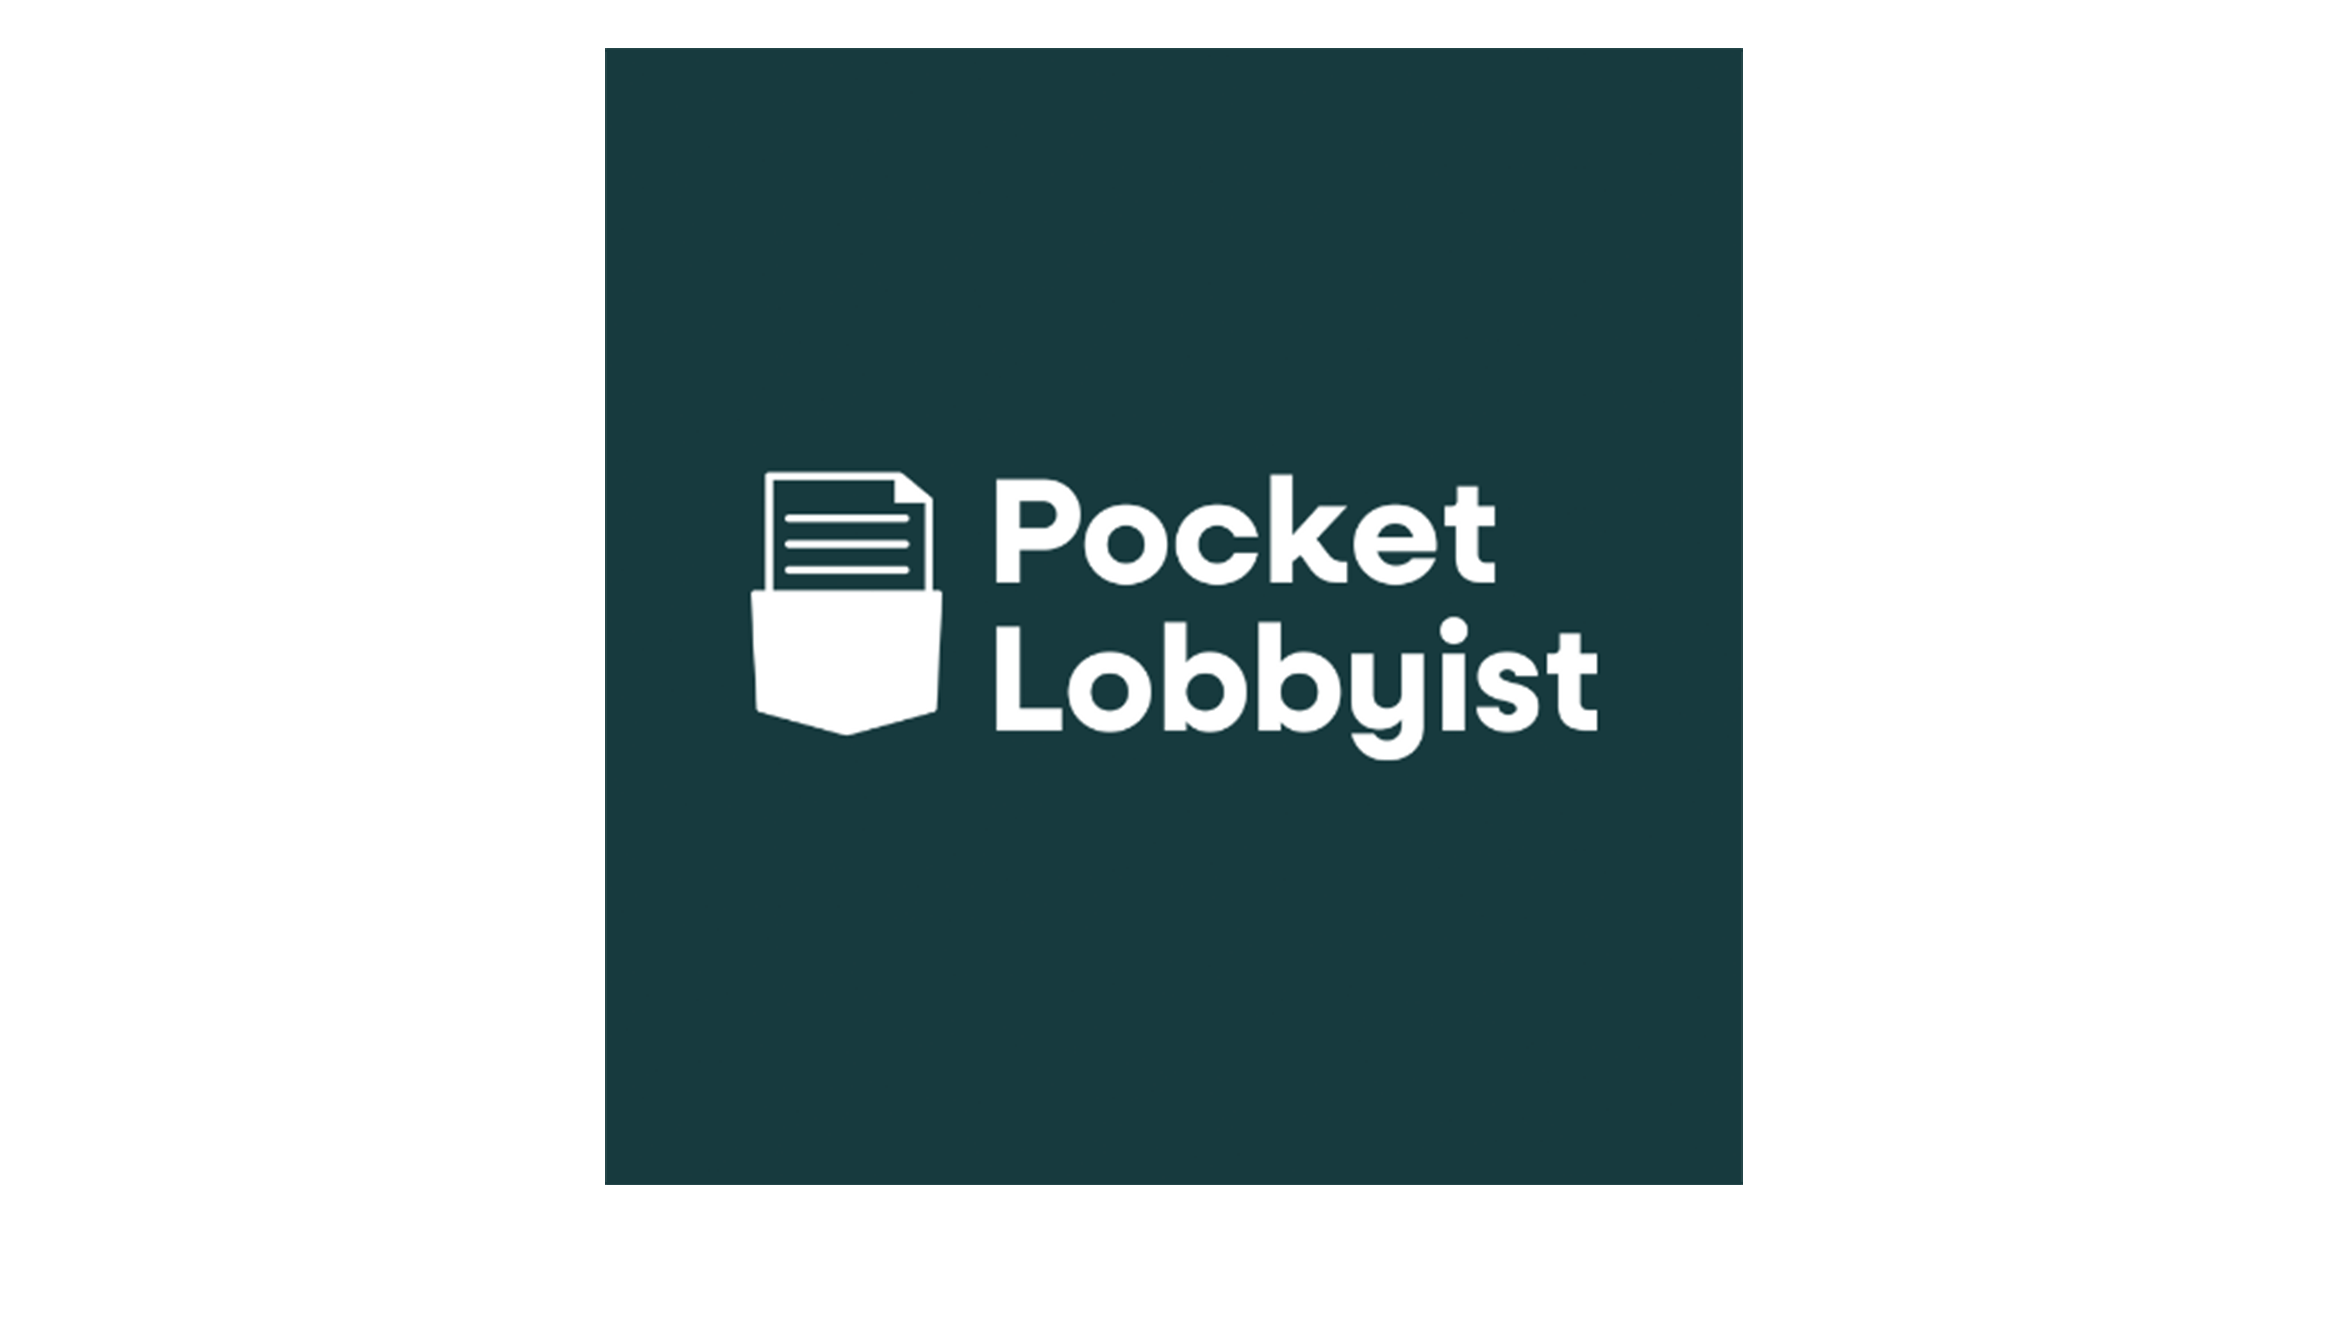 Pocket Lobbyist logo